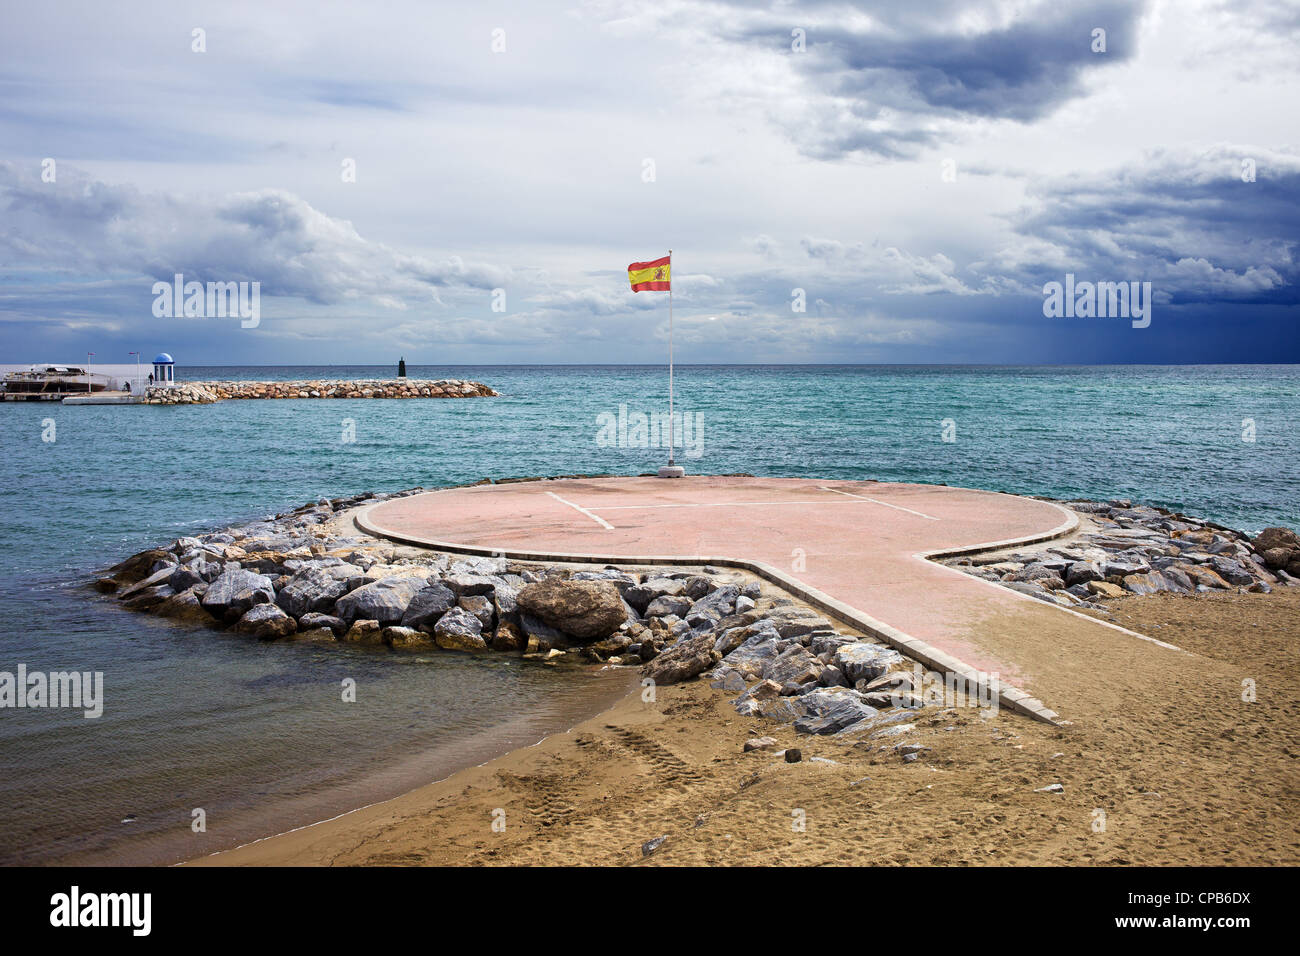 Heliport on the Mediterranean Sea with Spanish flag in Marbella, Costa del Sol, Malaga Province, Spain. Stock Photo